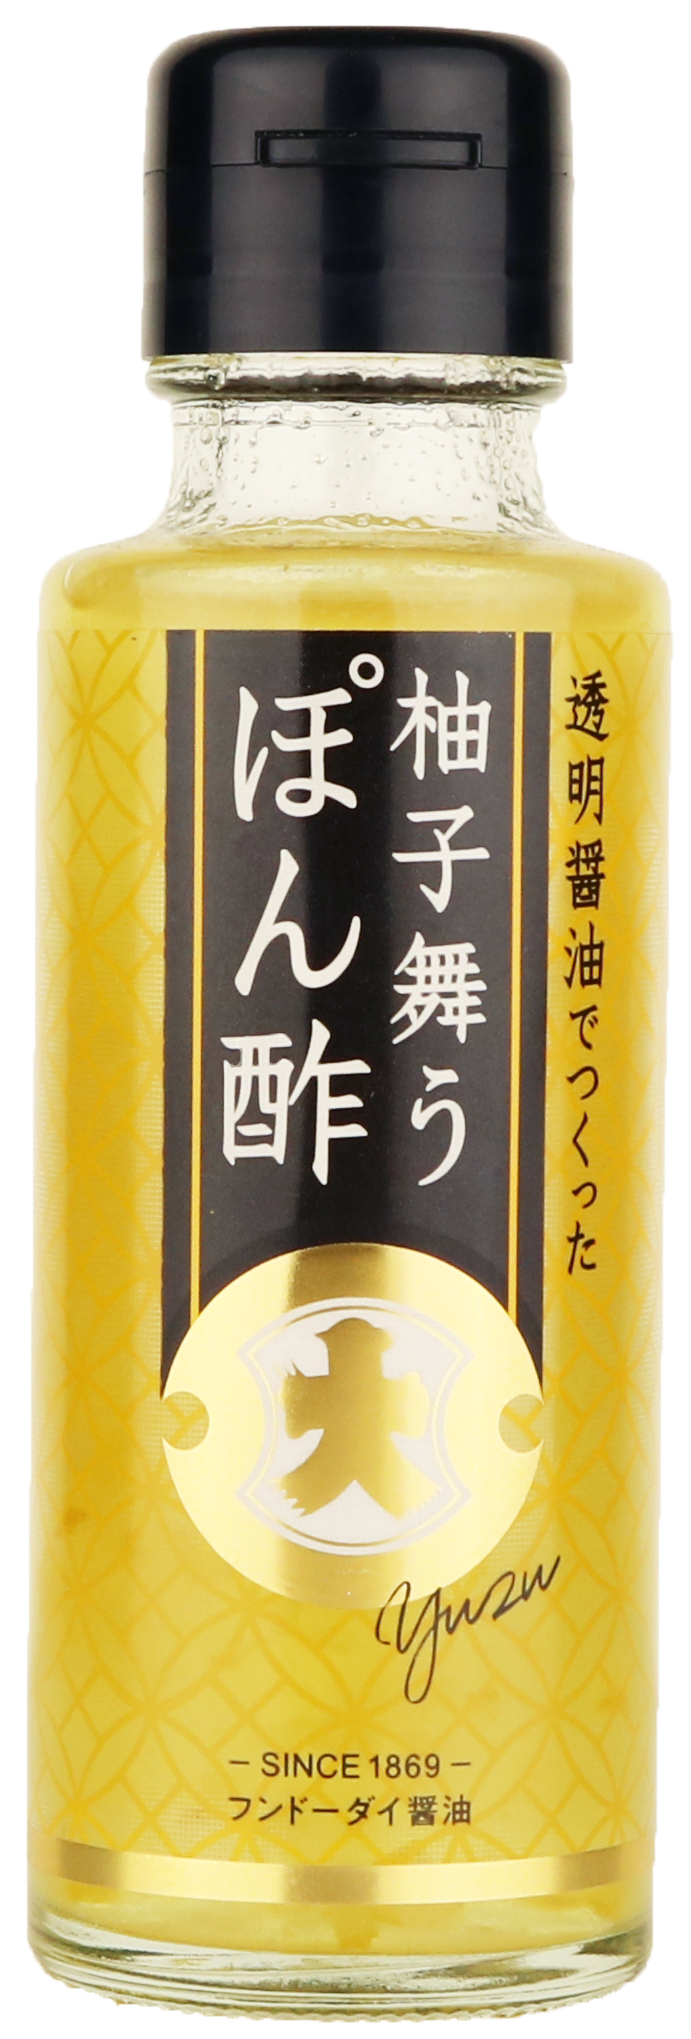 Yuzu Maiu Ponzu Made With Transparent Soy Sauce 100ml bottle